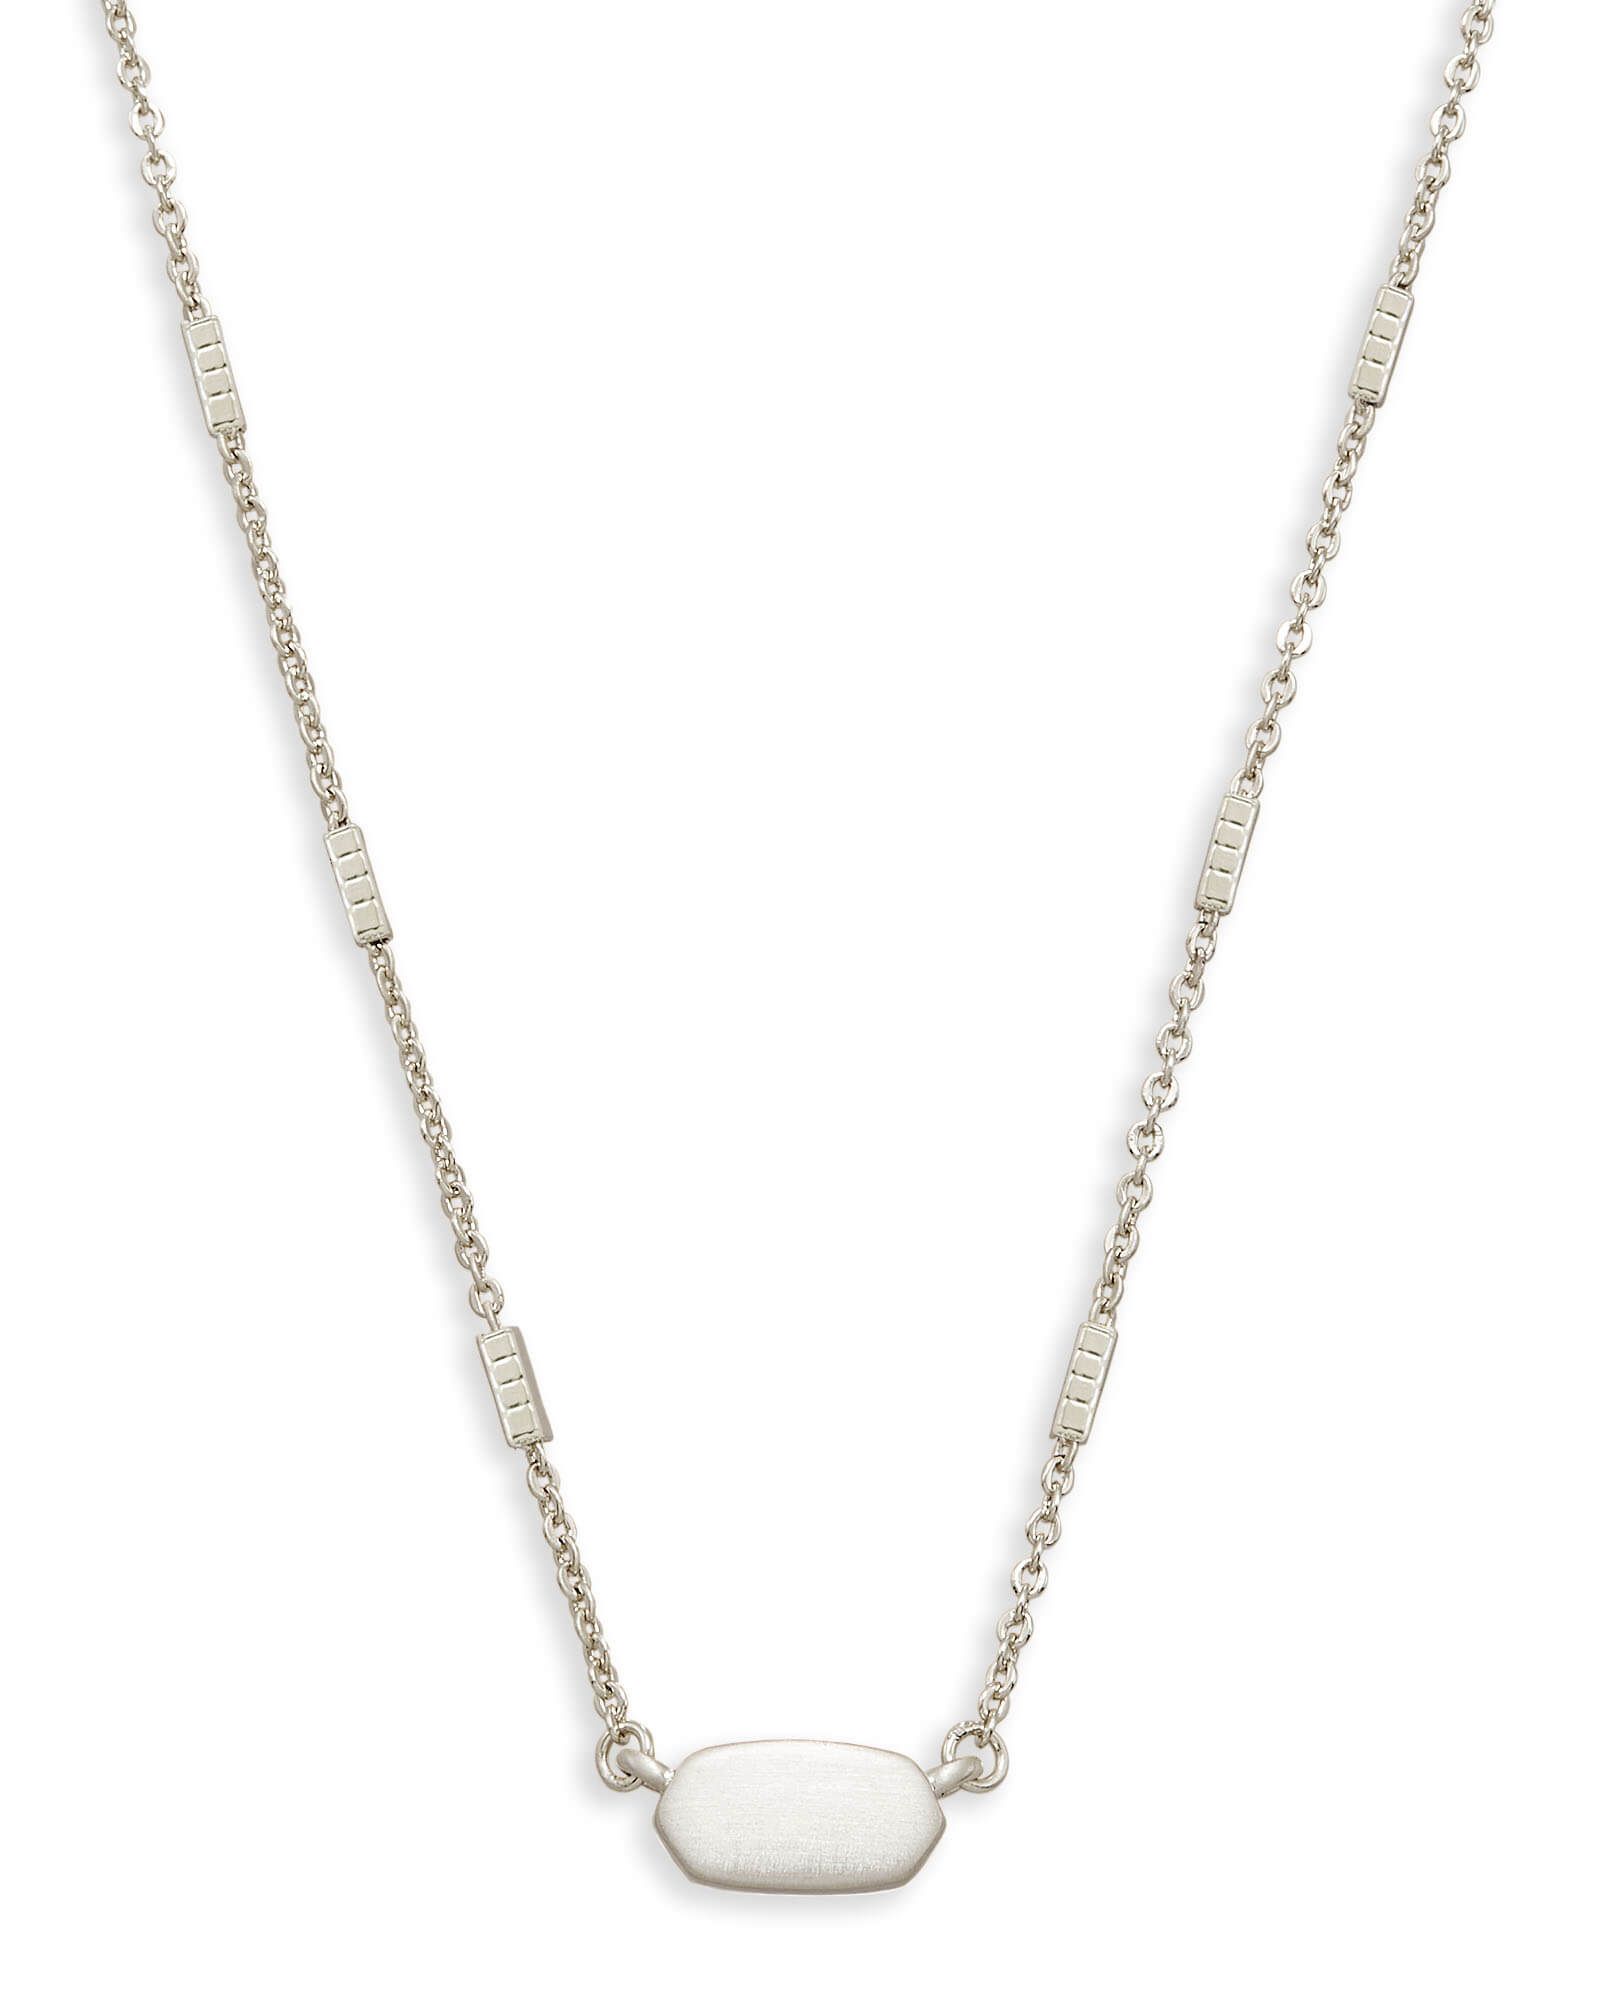 Fern Pendant Necklace in Bright Silver | Kendra Scott